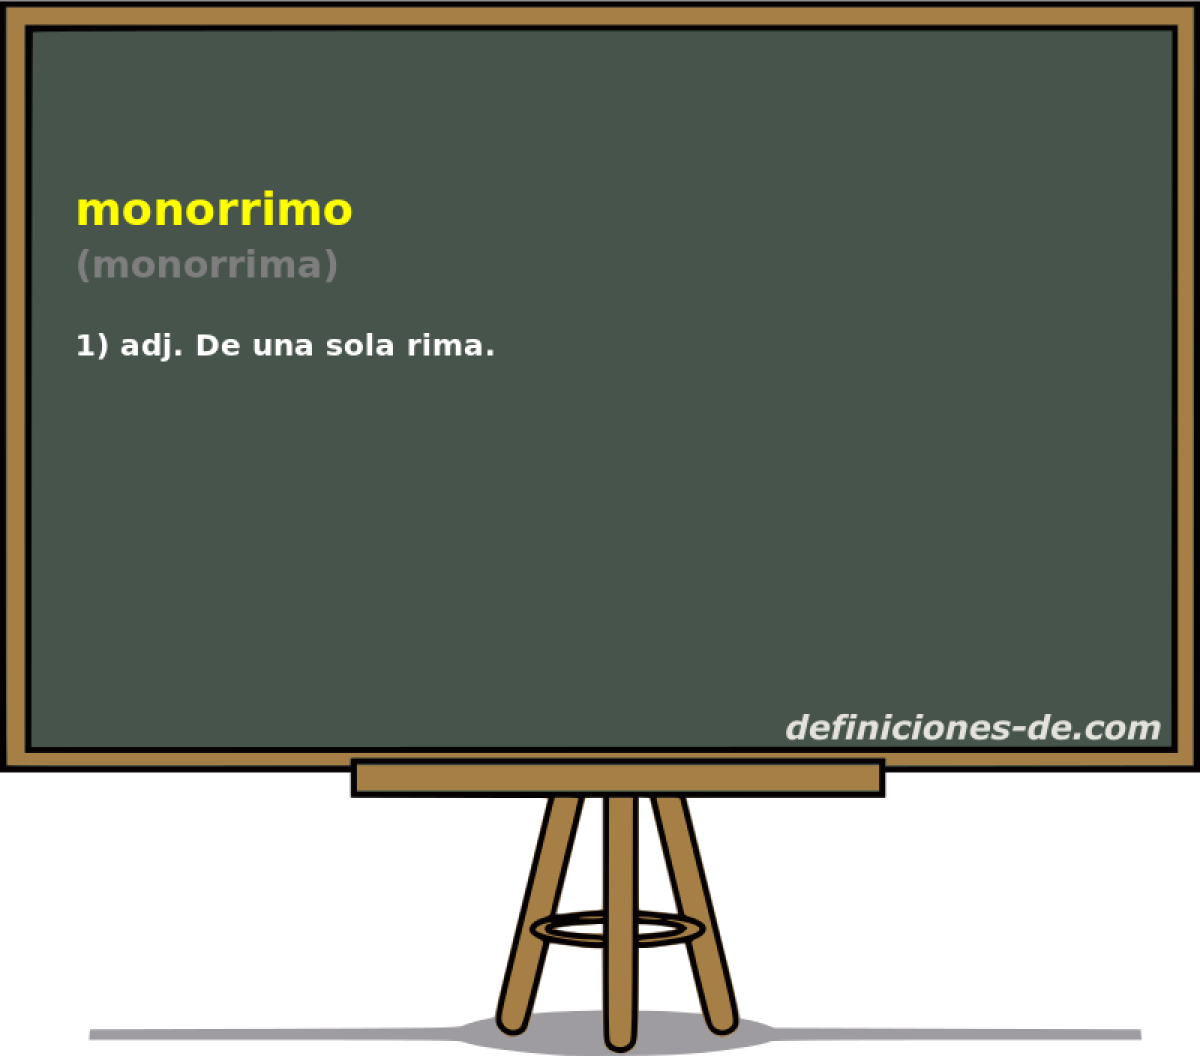 monorrimo (monorrima)